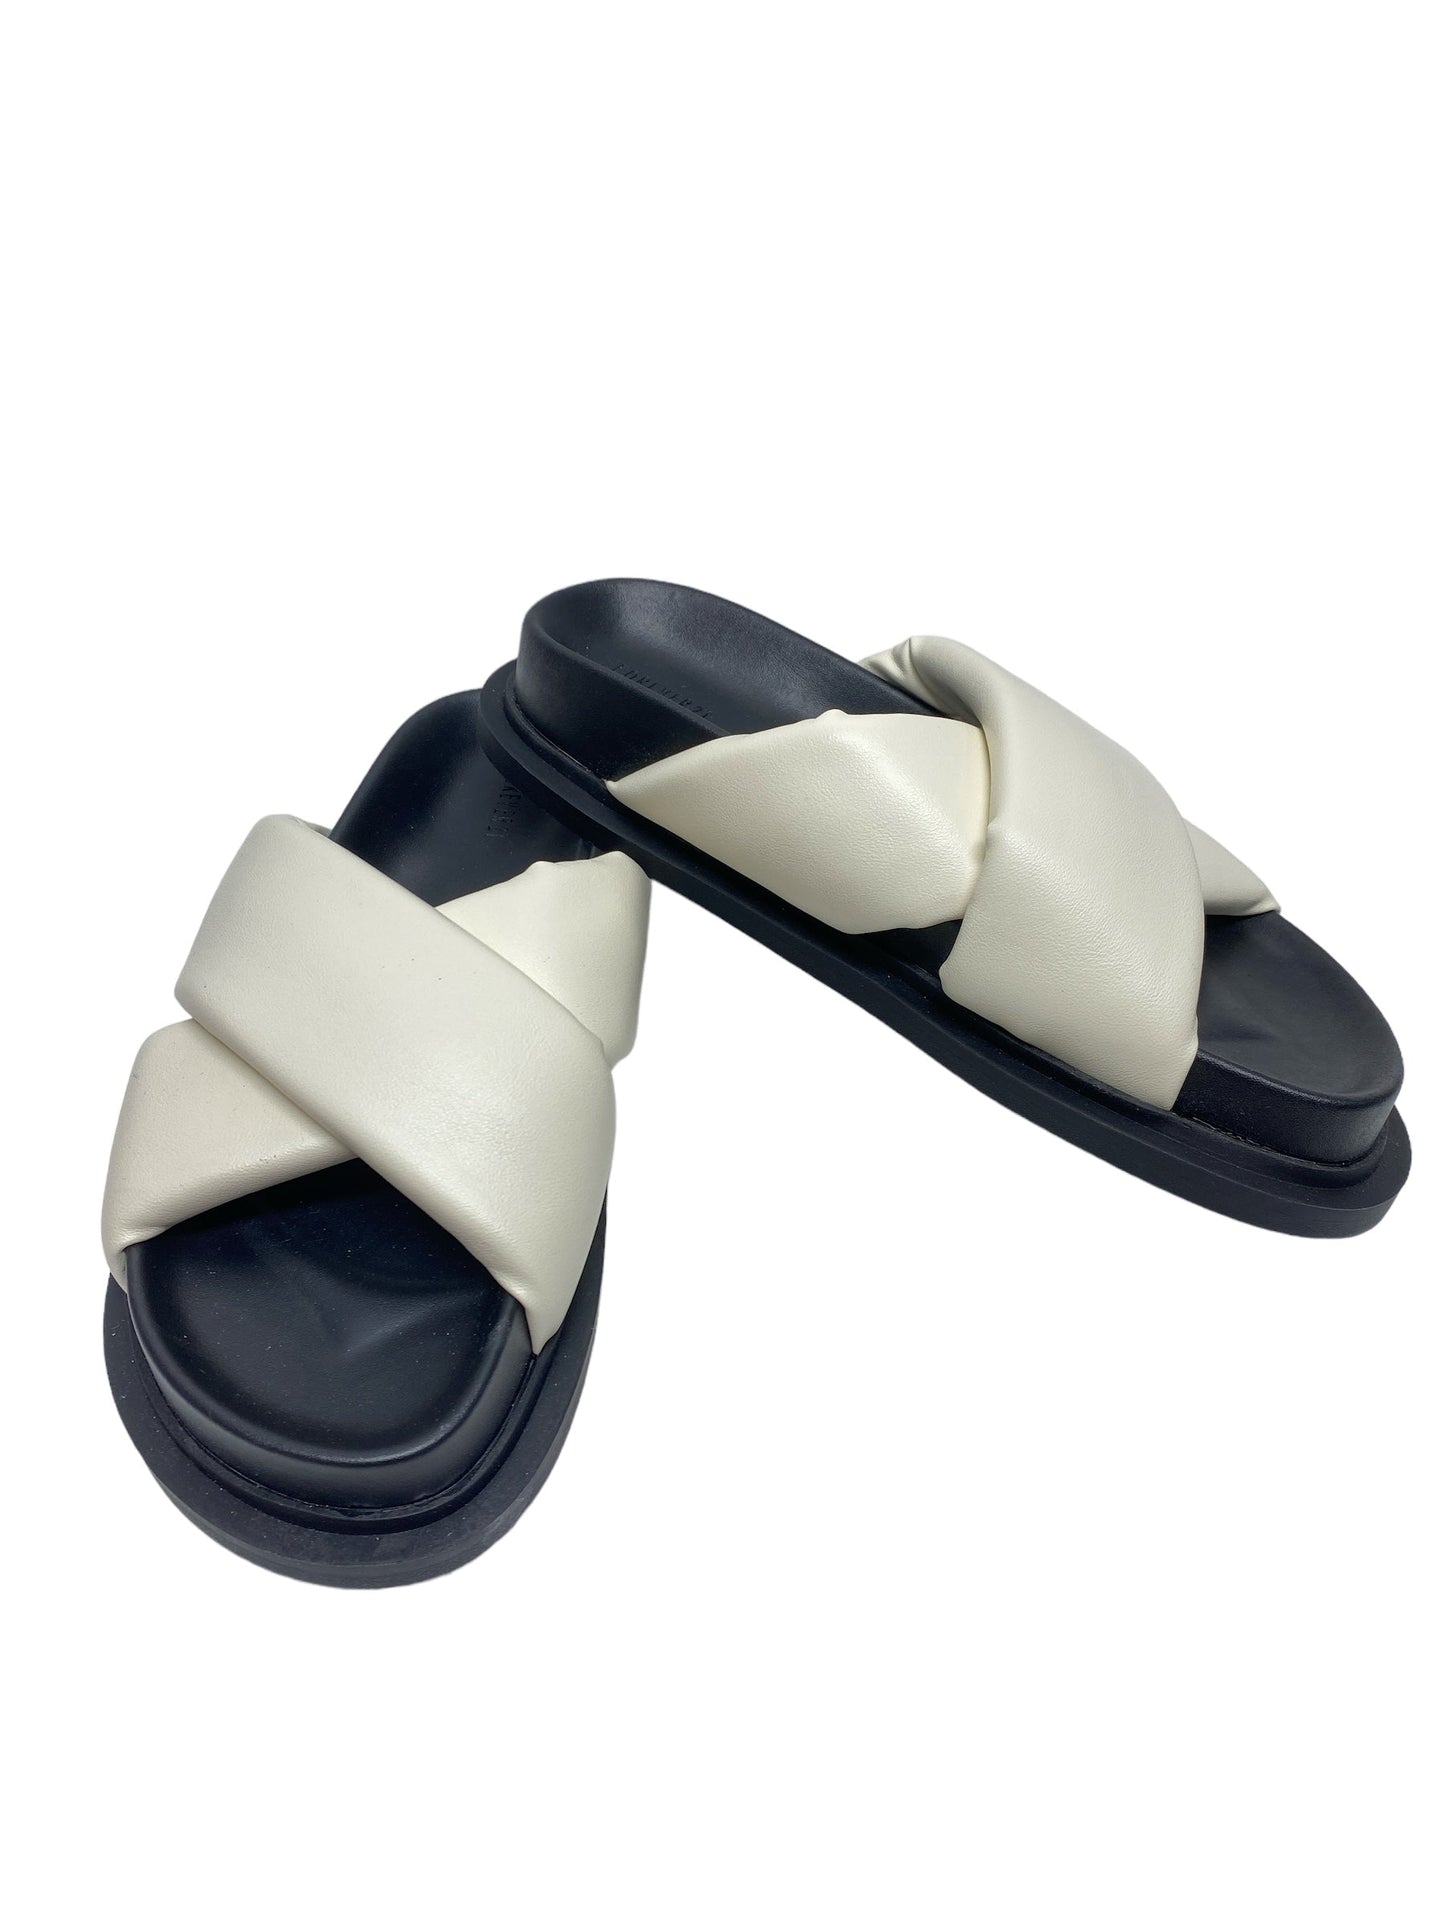 Black & White Sandals Flats Forever 21, Size 8